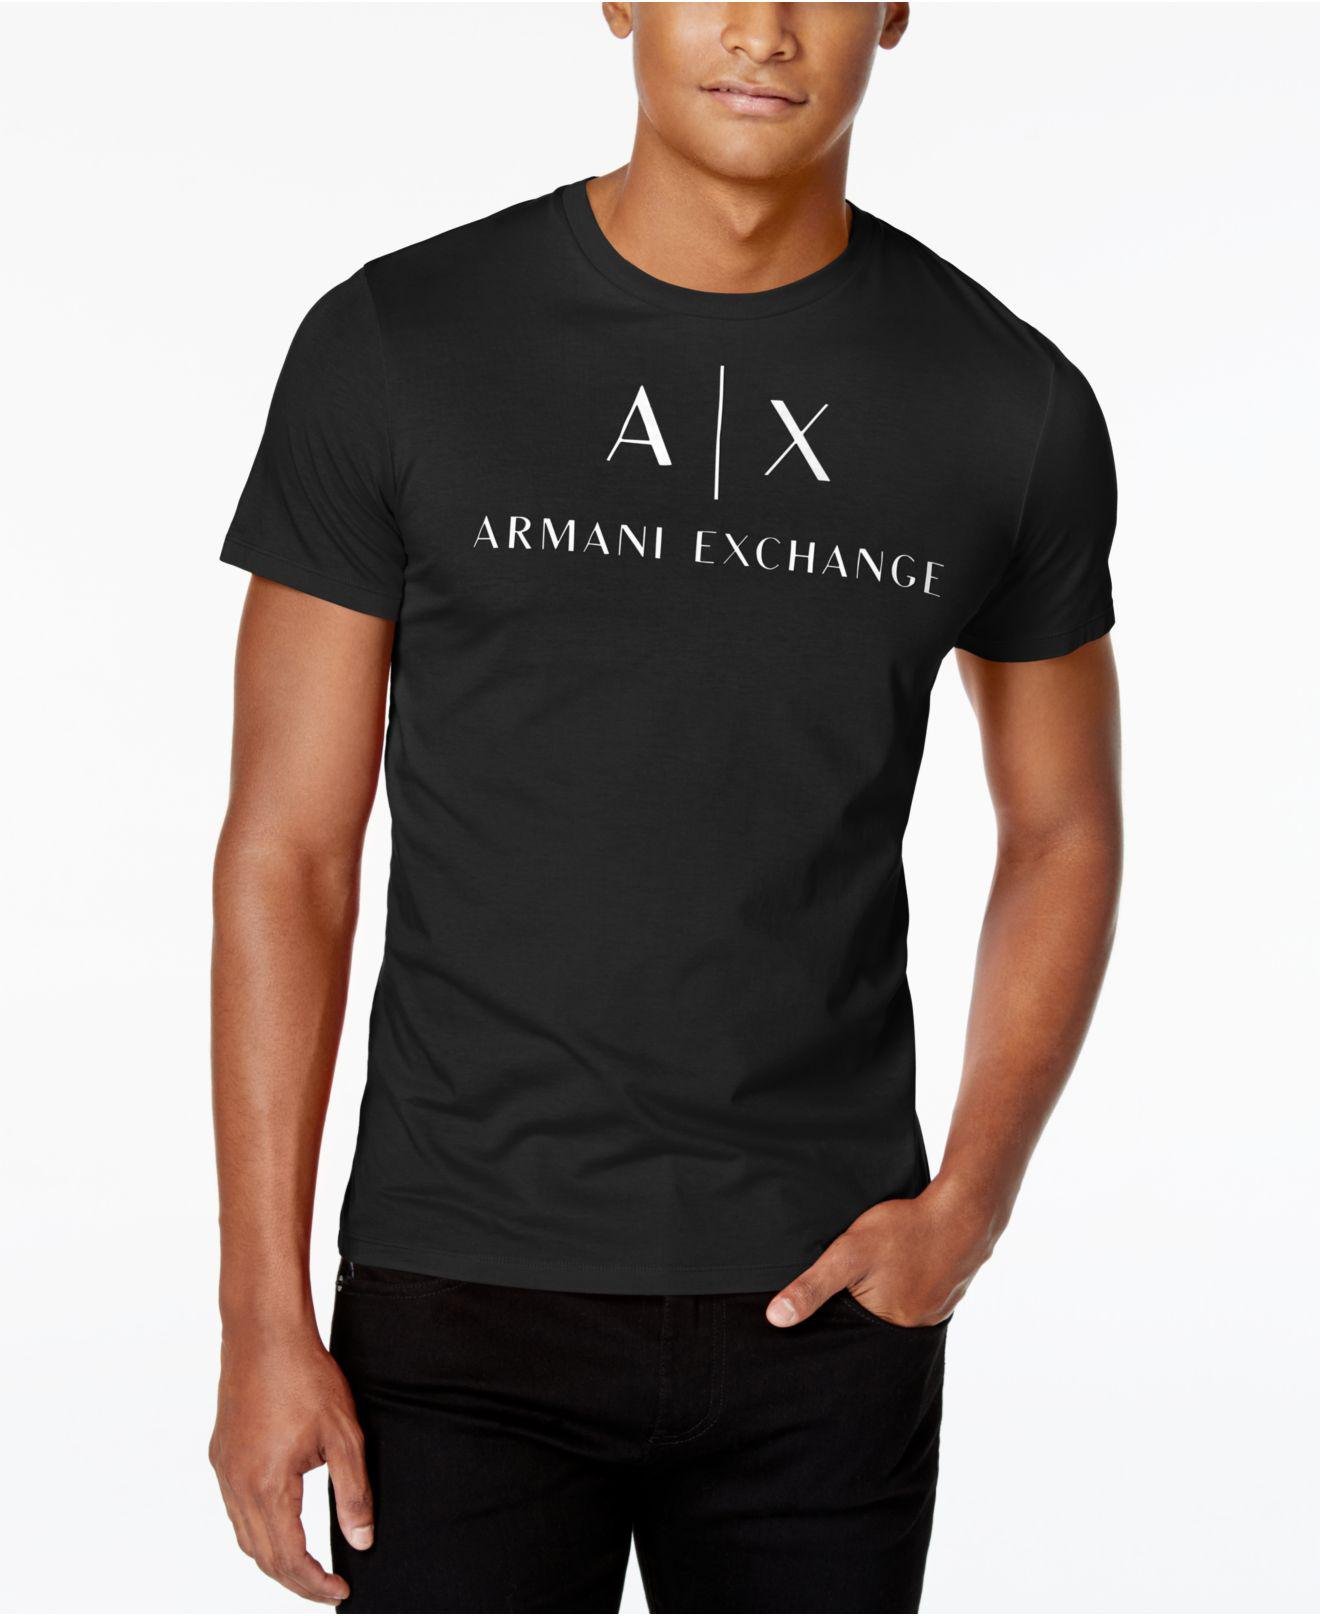 armani exchange t shirt online india